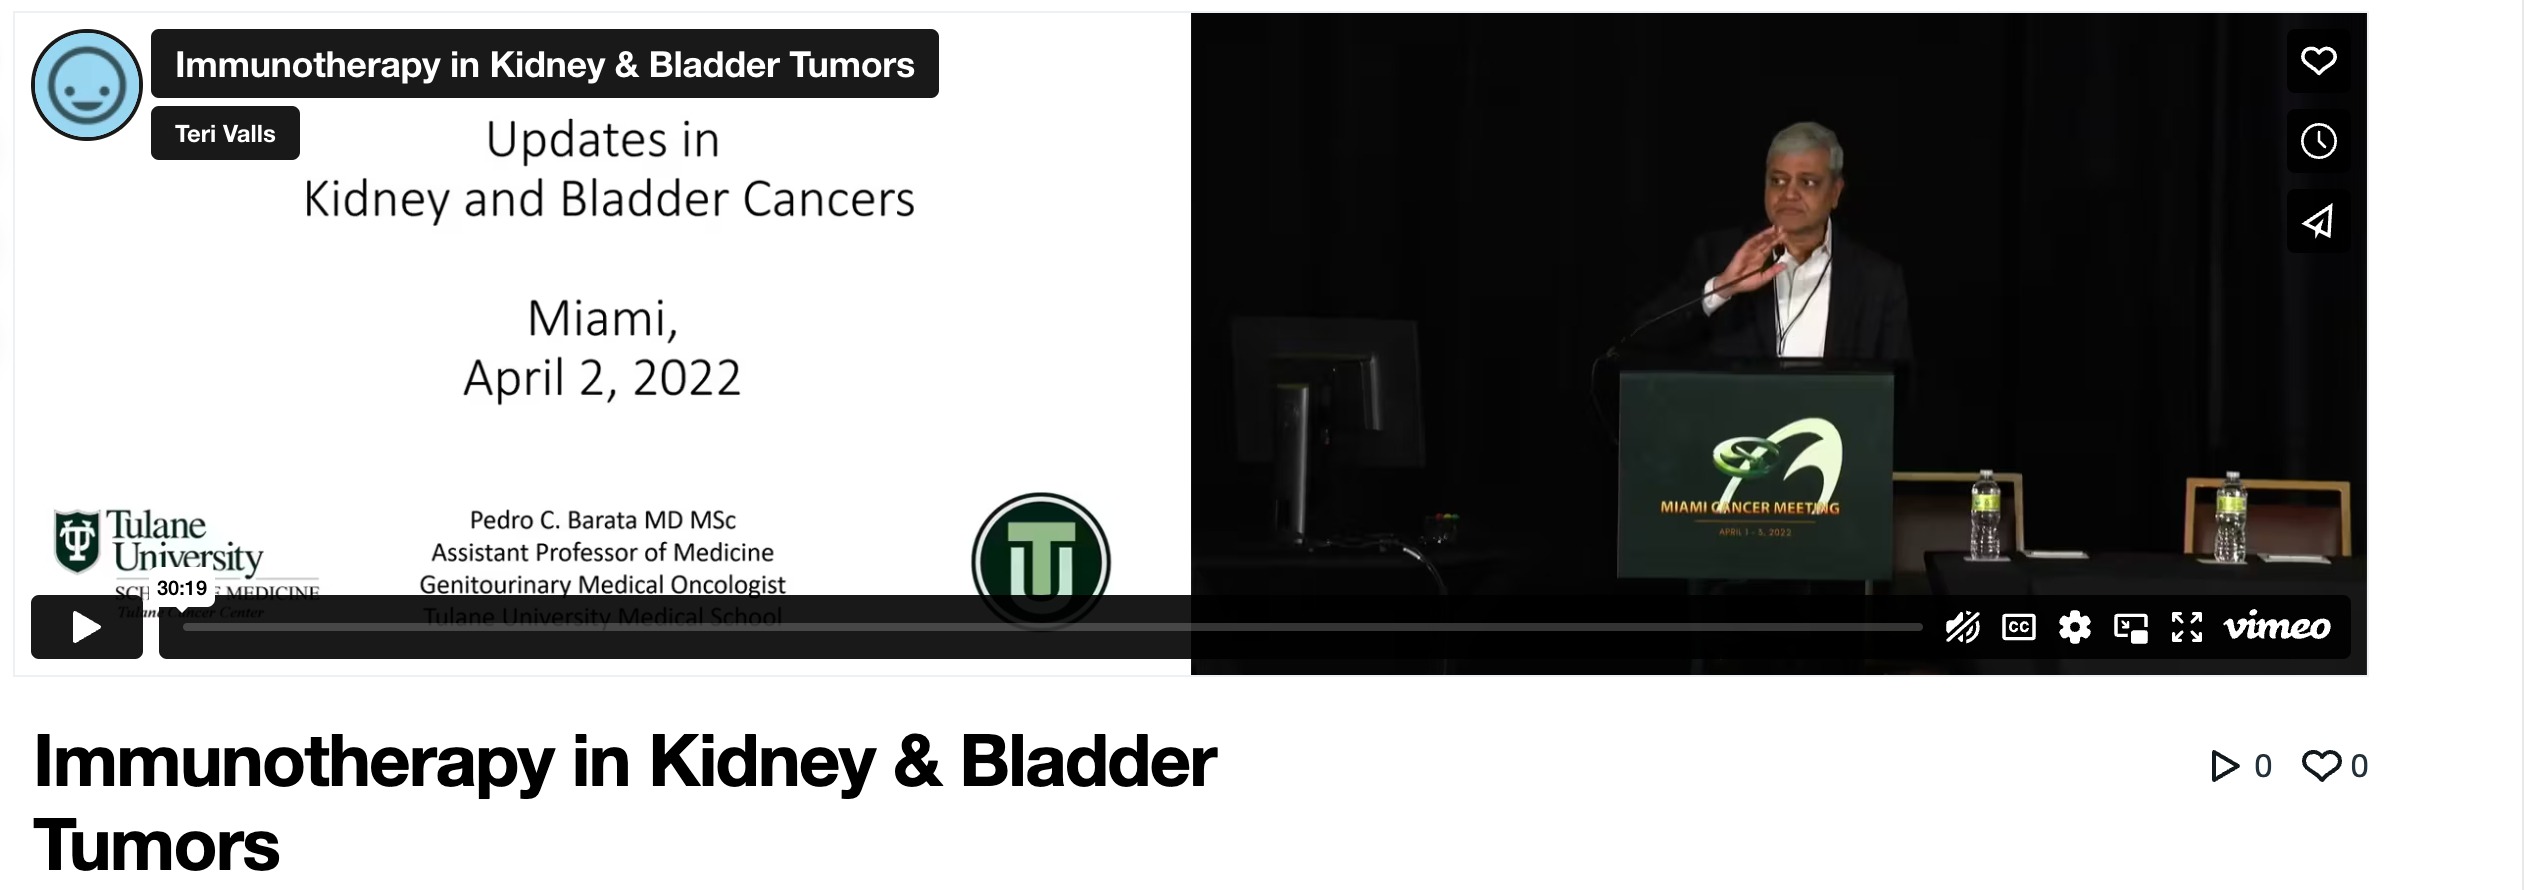 Immunotherapy in Kidney & Bladder Tumors